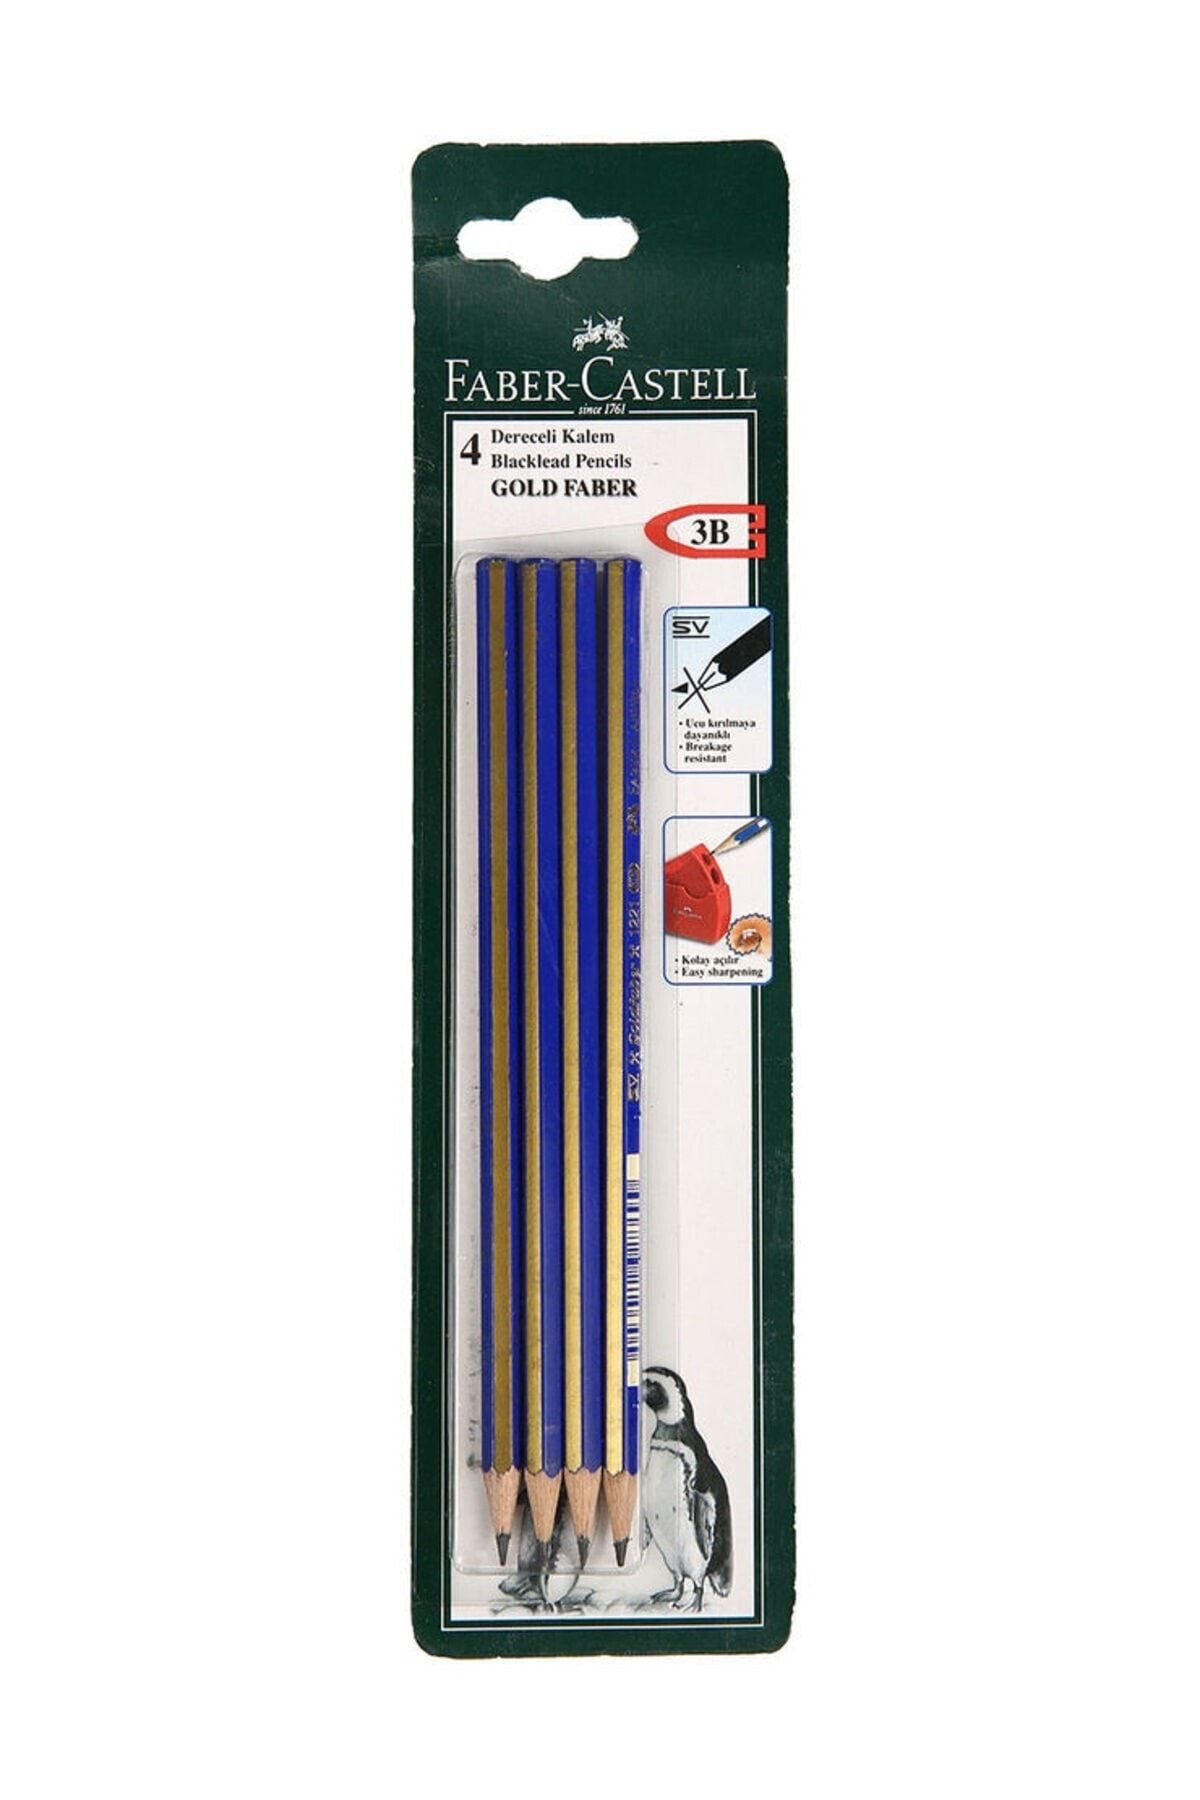 Faber Castell Faber-castell Dereceli Kurşun Kalem Gold 3b Kartelali 4 Lü 5504112503